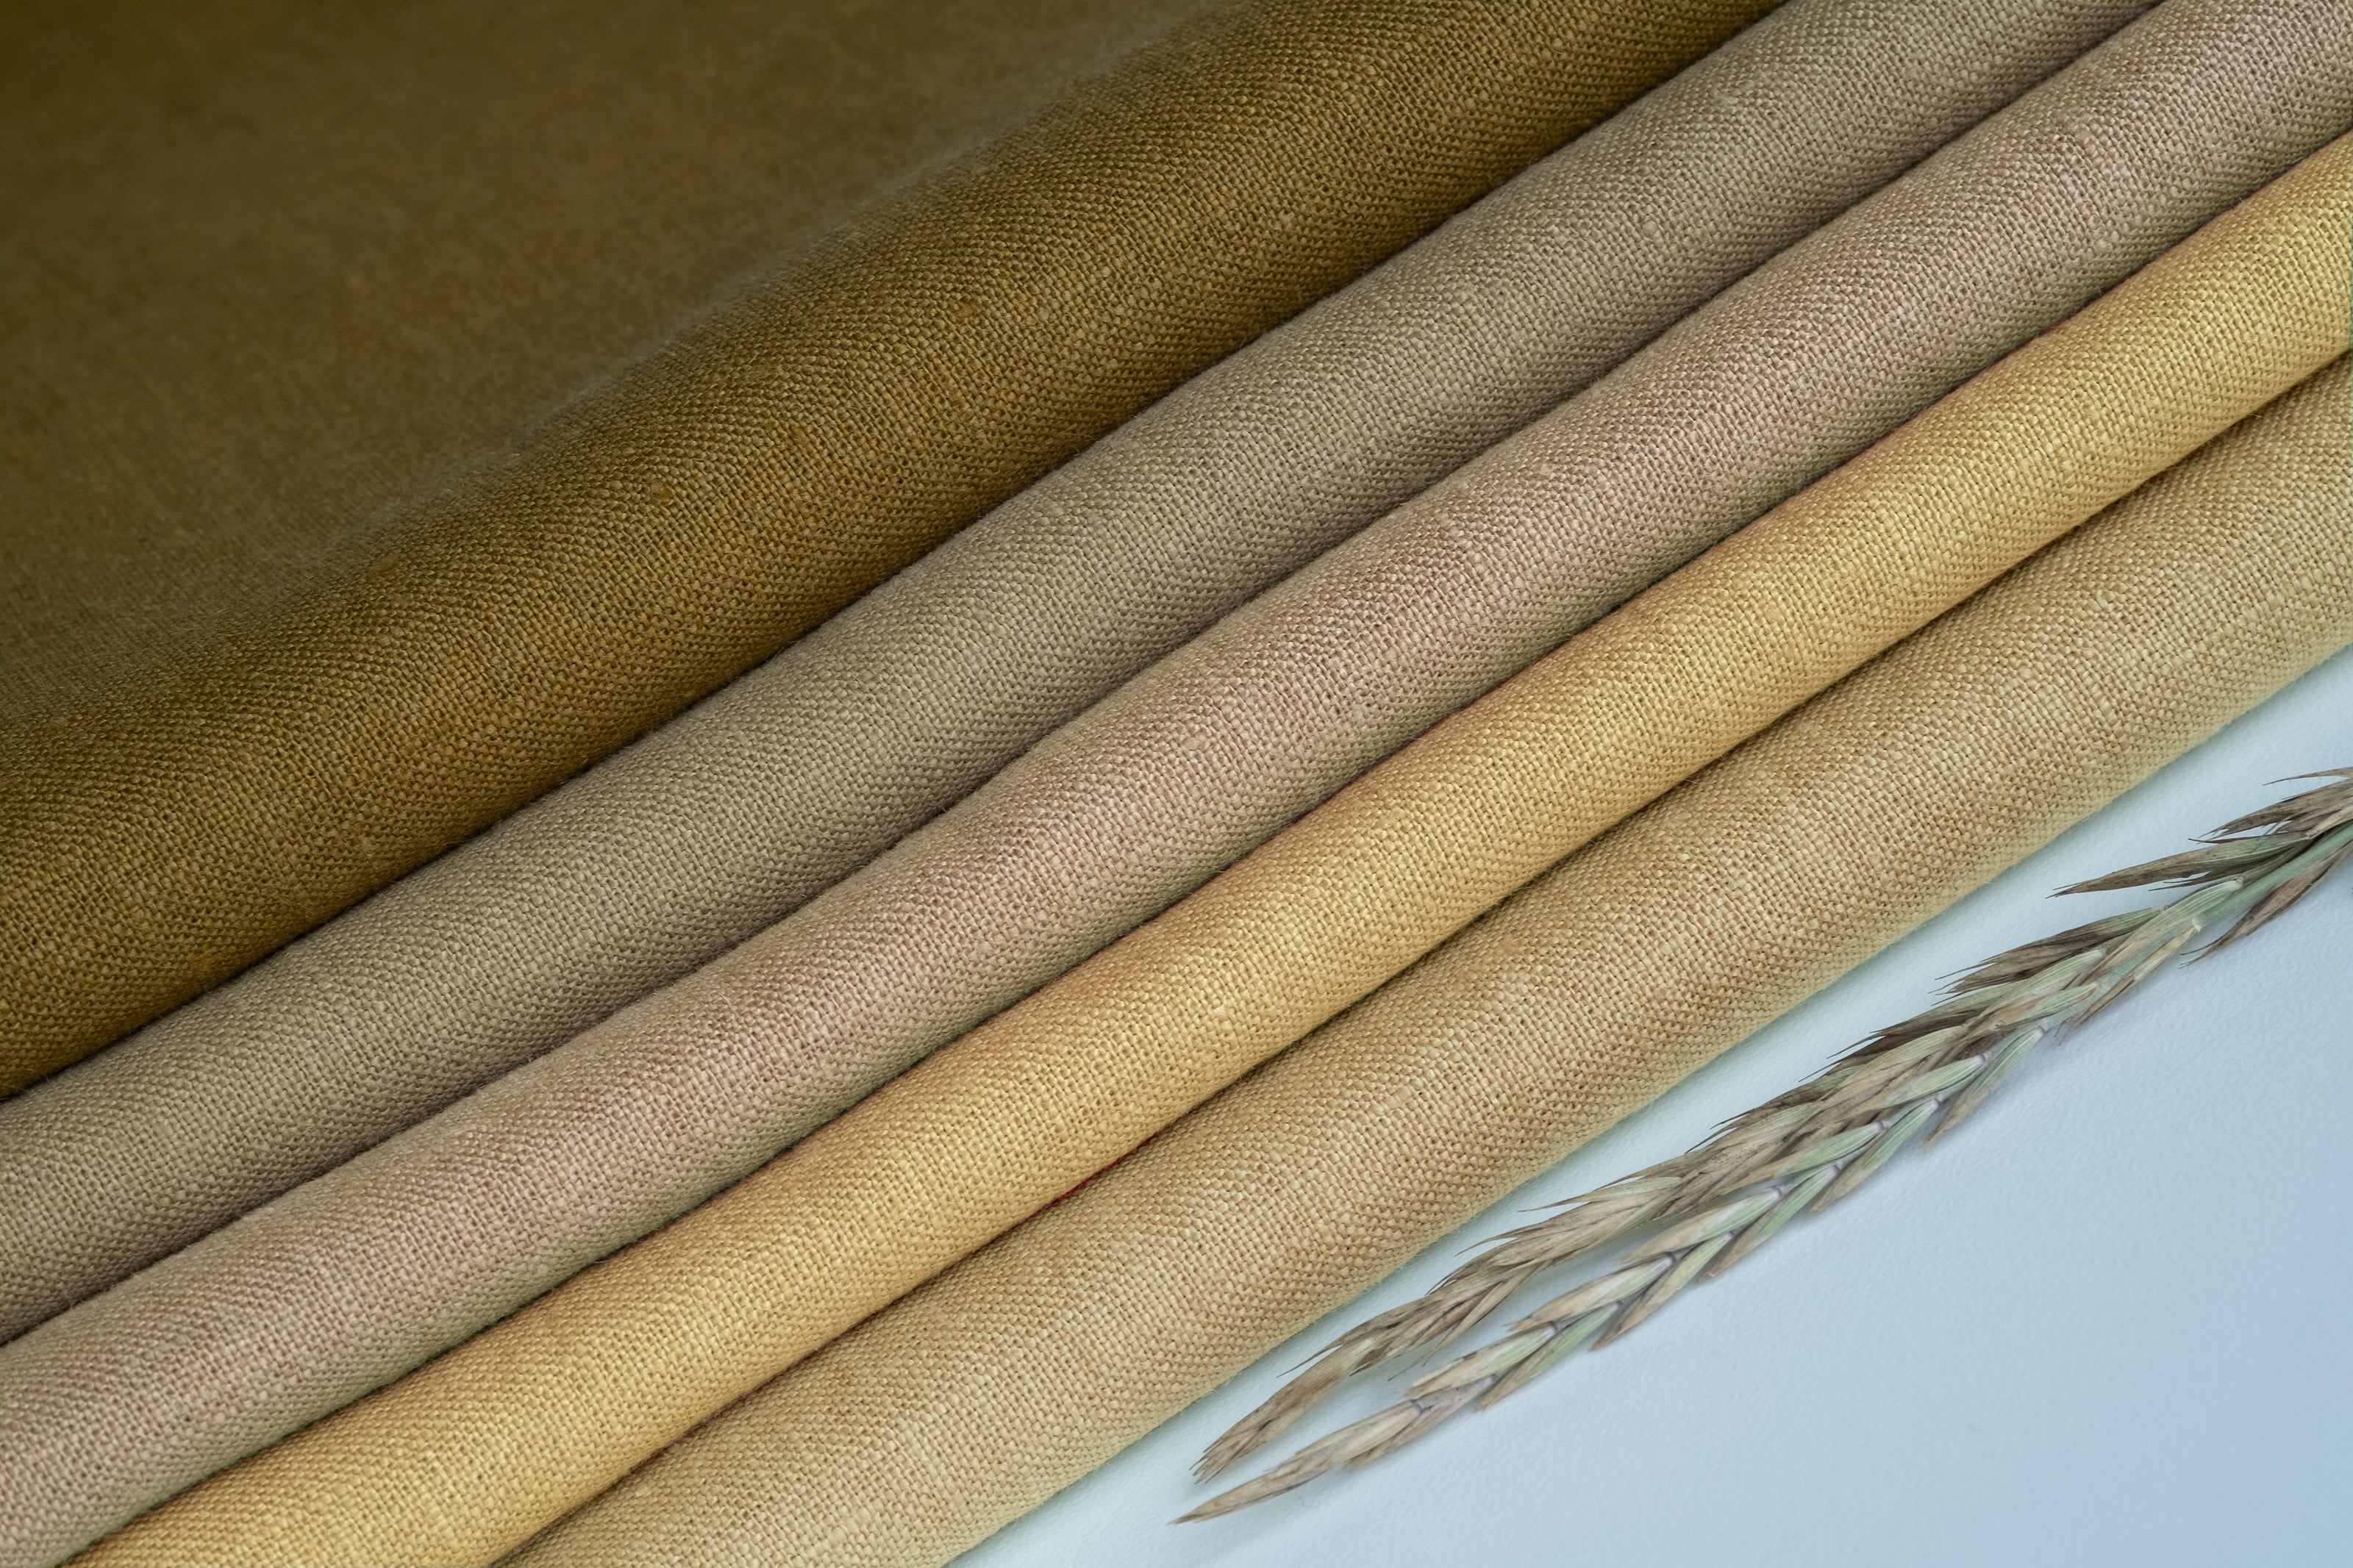 IRISH Linen Fabric by the Yard / 100% Linen Fabric / Beige, Sand Linen Fabric